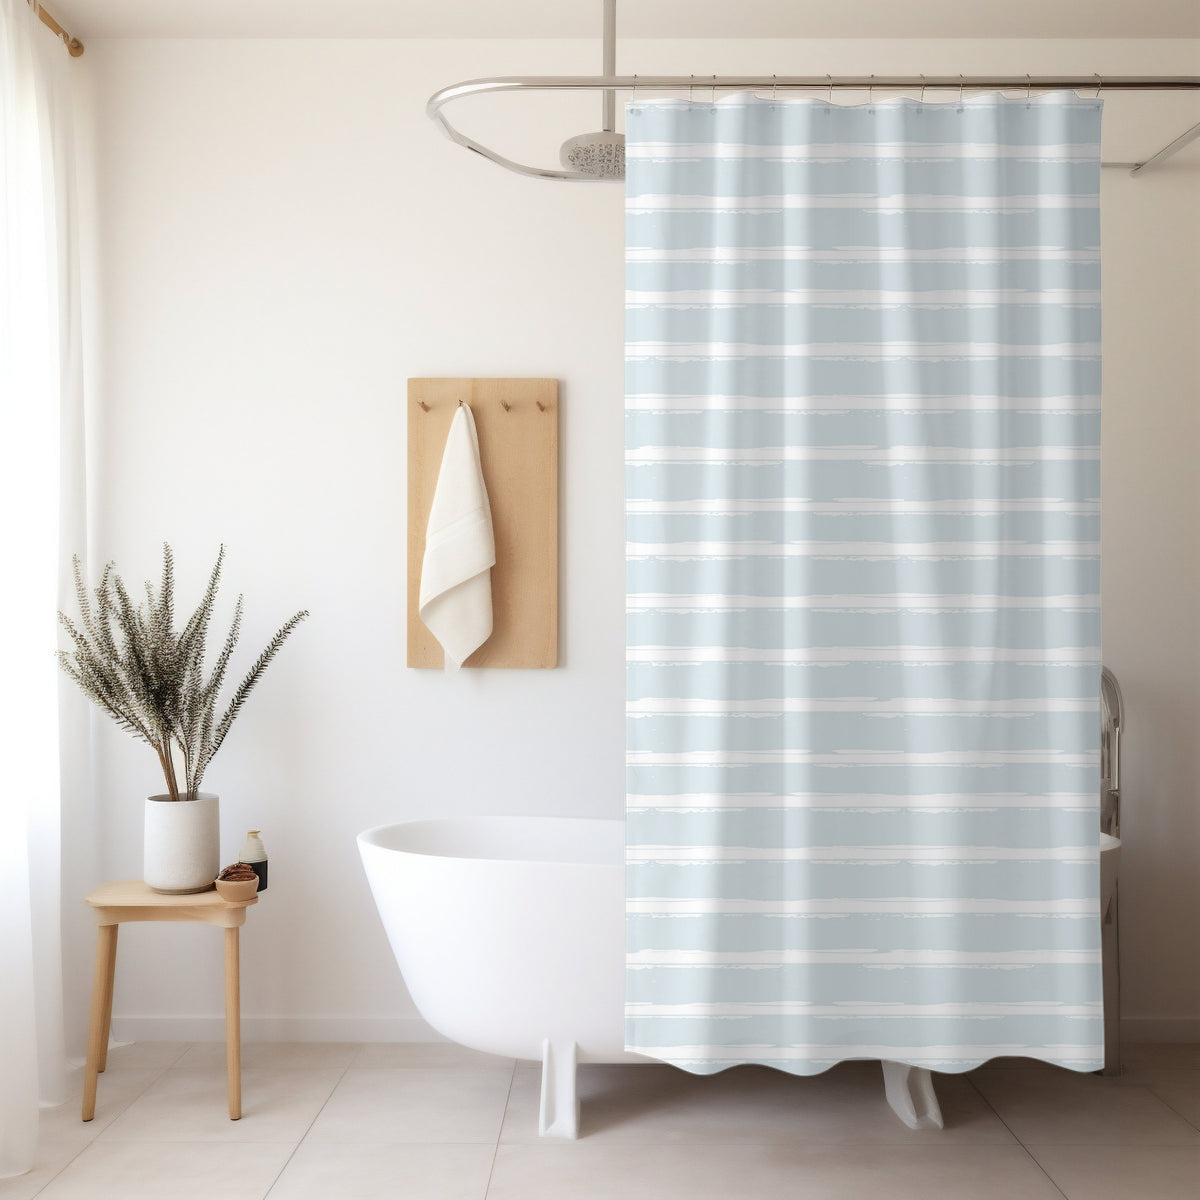 Nautical Design Shower Curtain Ocean Waves Bathroom Blue and White Shower Water Design for Guest Bathroom Nautical Aesthetic Homeowner Bath